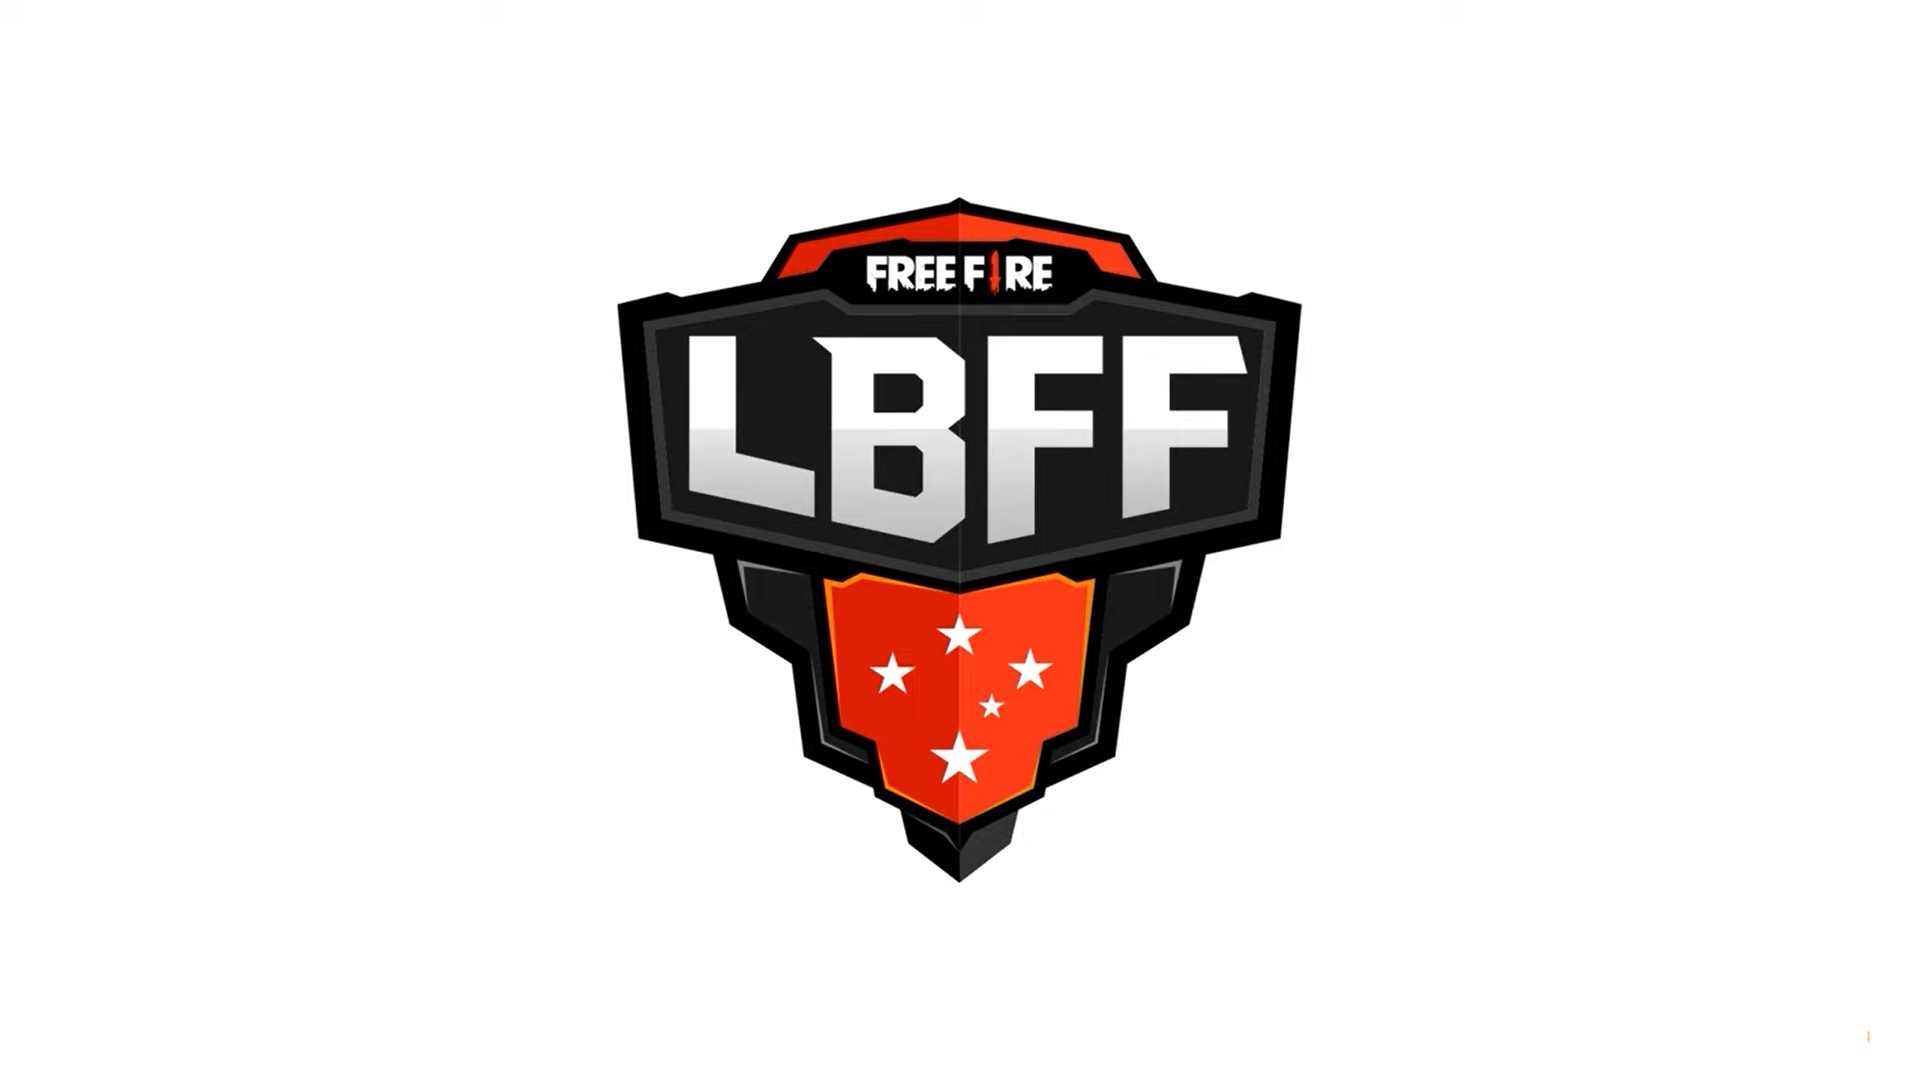 Fabrycio Designer on X: Logo de Line do Free fire: Segue nós #freefire # logo #guilda #ff #freefirebrasil #garena #garenabr #garenabrasil #cerolzera  #nobrutv #design #jersey #camisa #gaming #freefirebr #brasil   / X